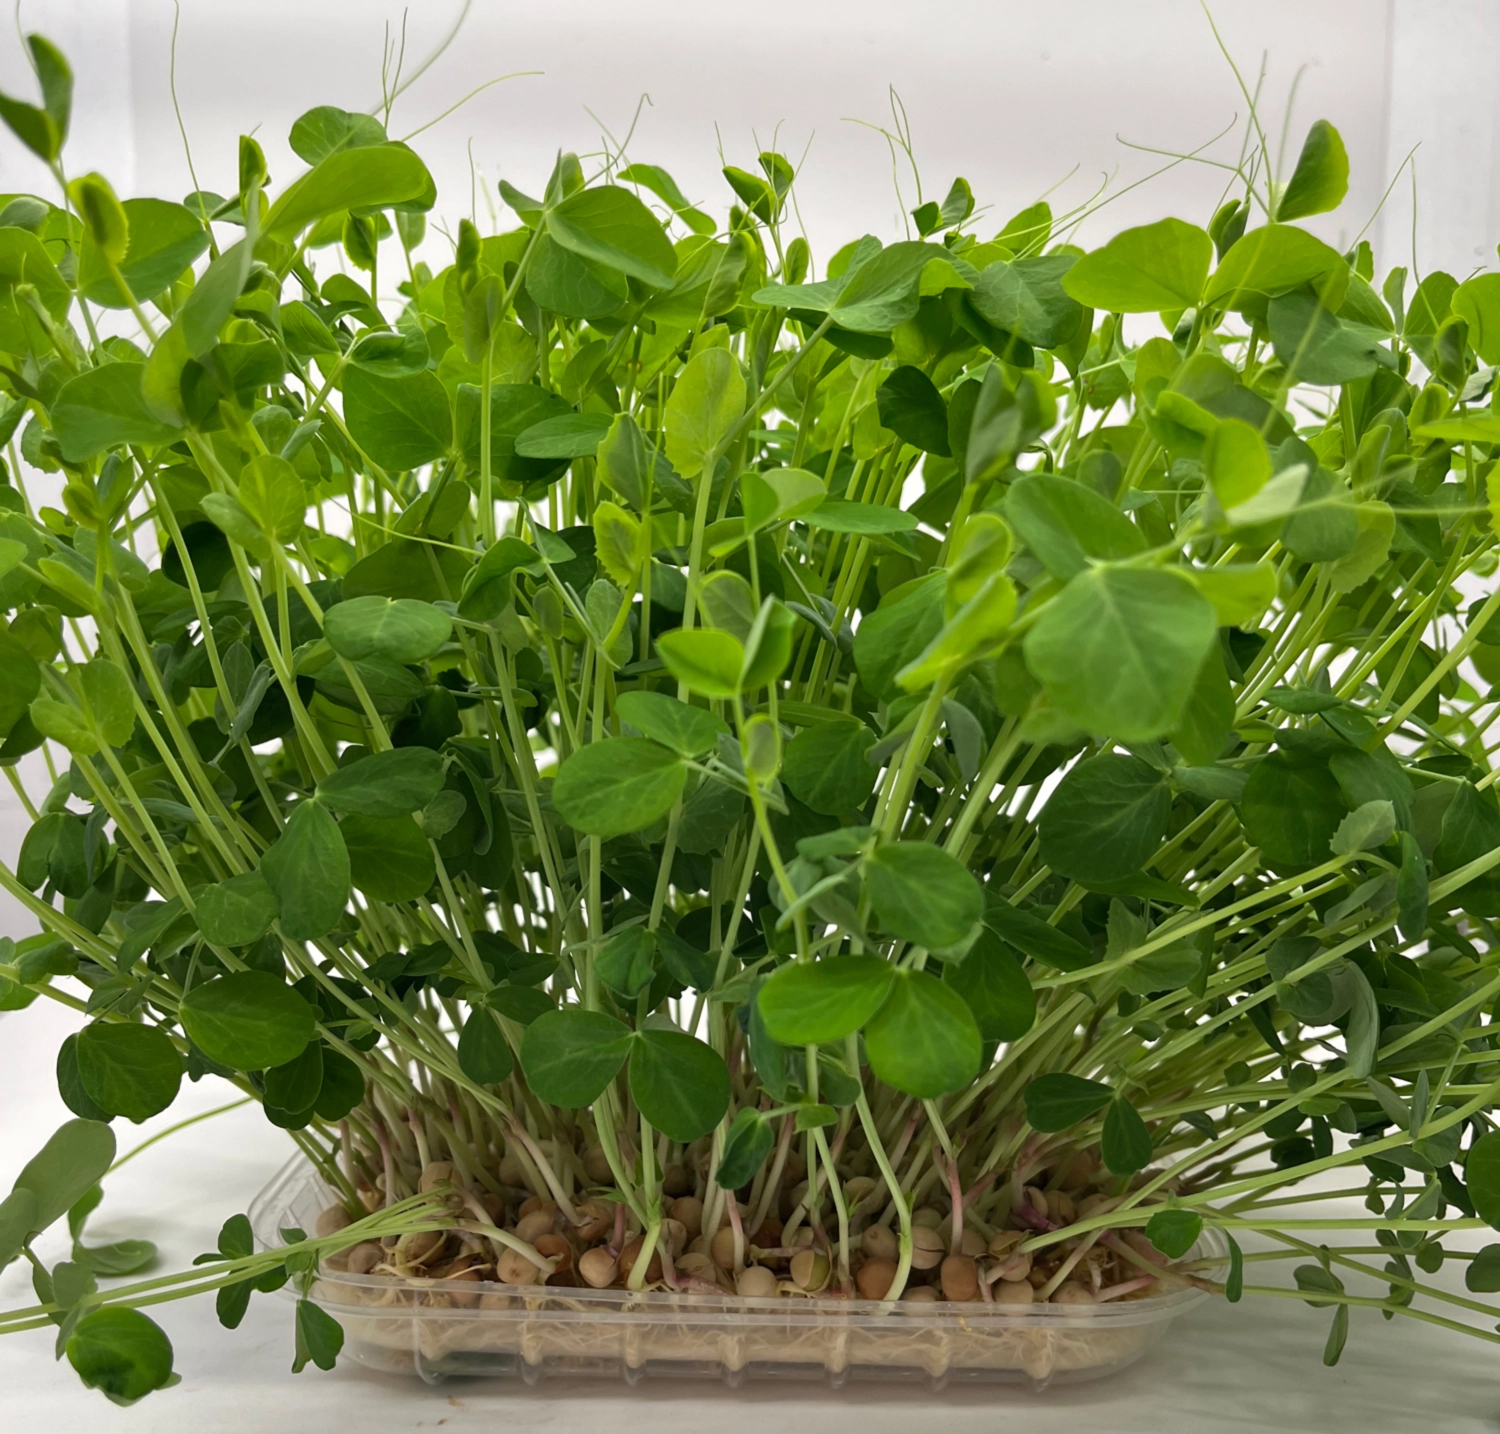 pea-shoots-organic-living-micro-grens